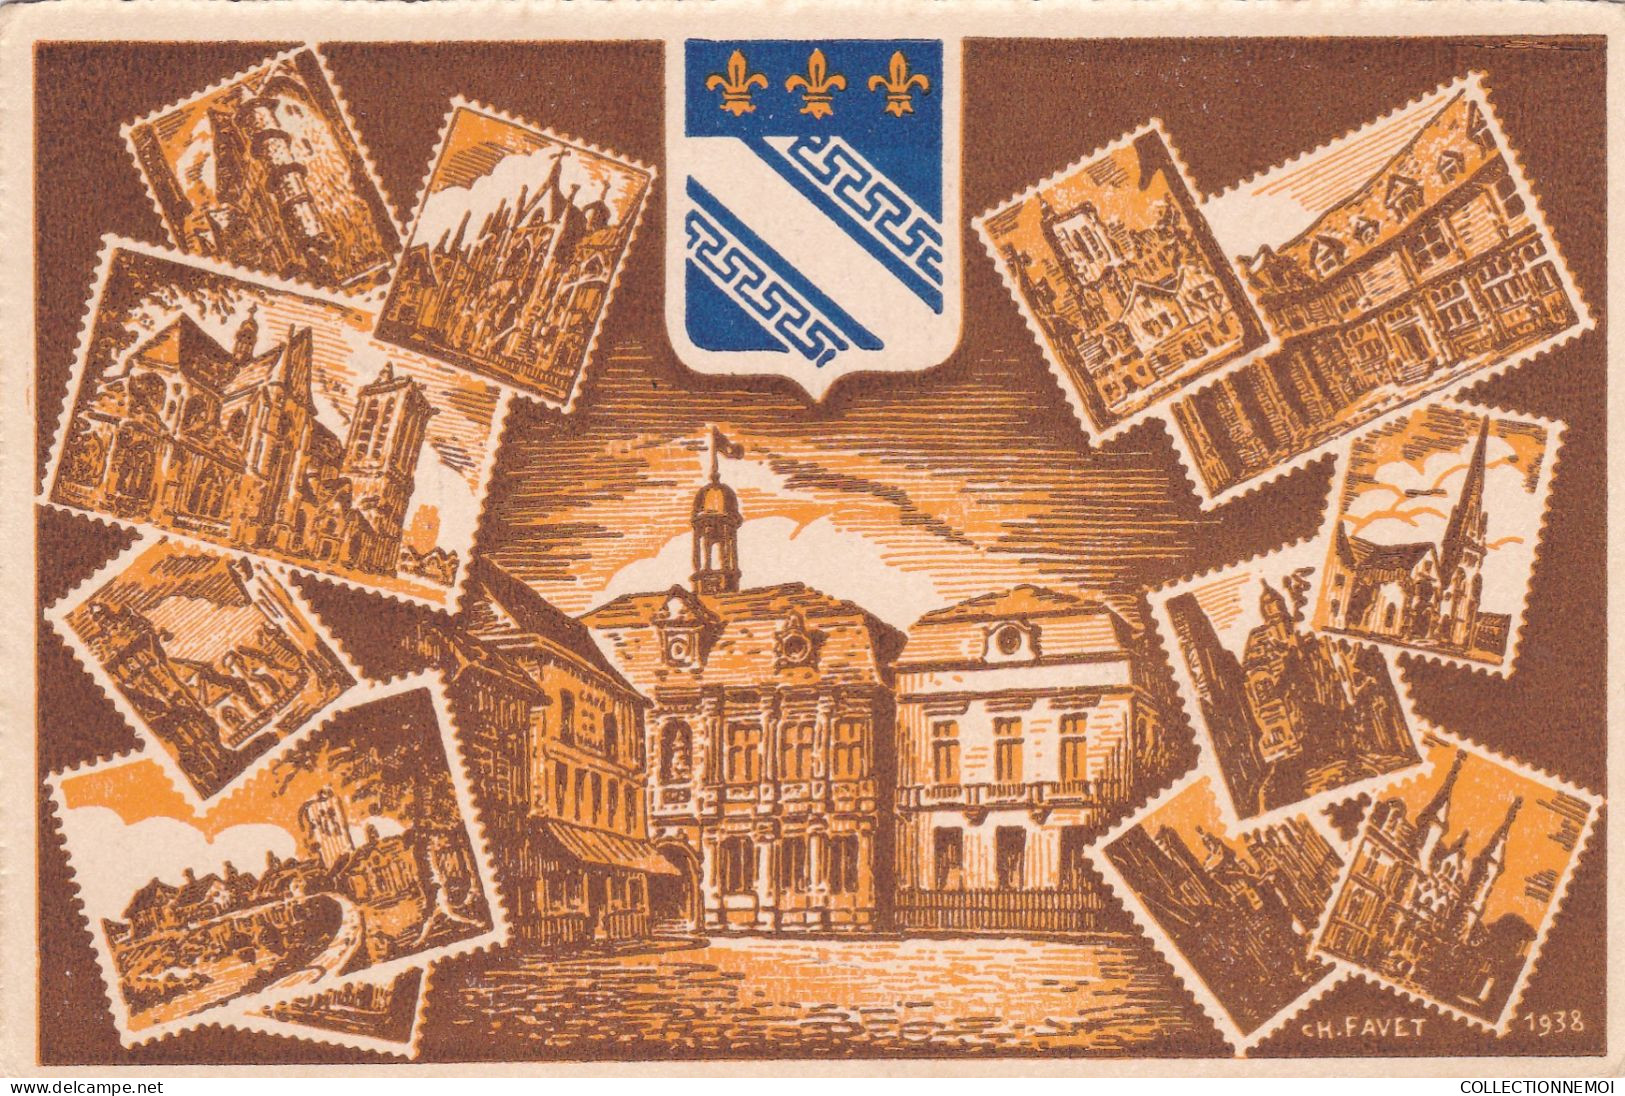 EXPOSITION DE PROPAGANDE PHILATELIQUE De TROYES 12-13-14- MAI 1938 - Manual Postmarks